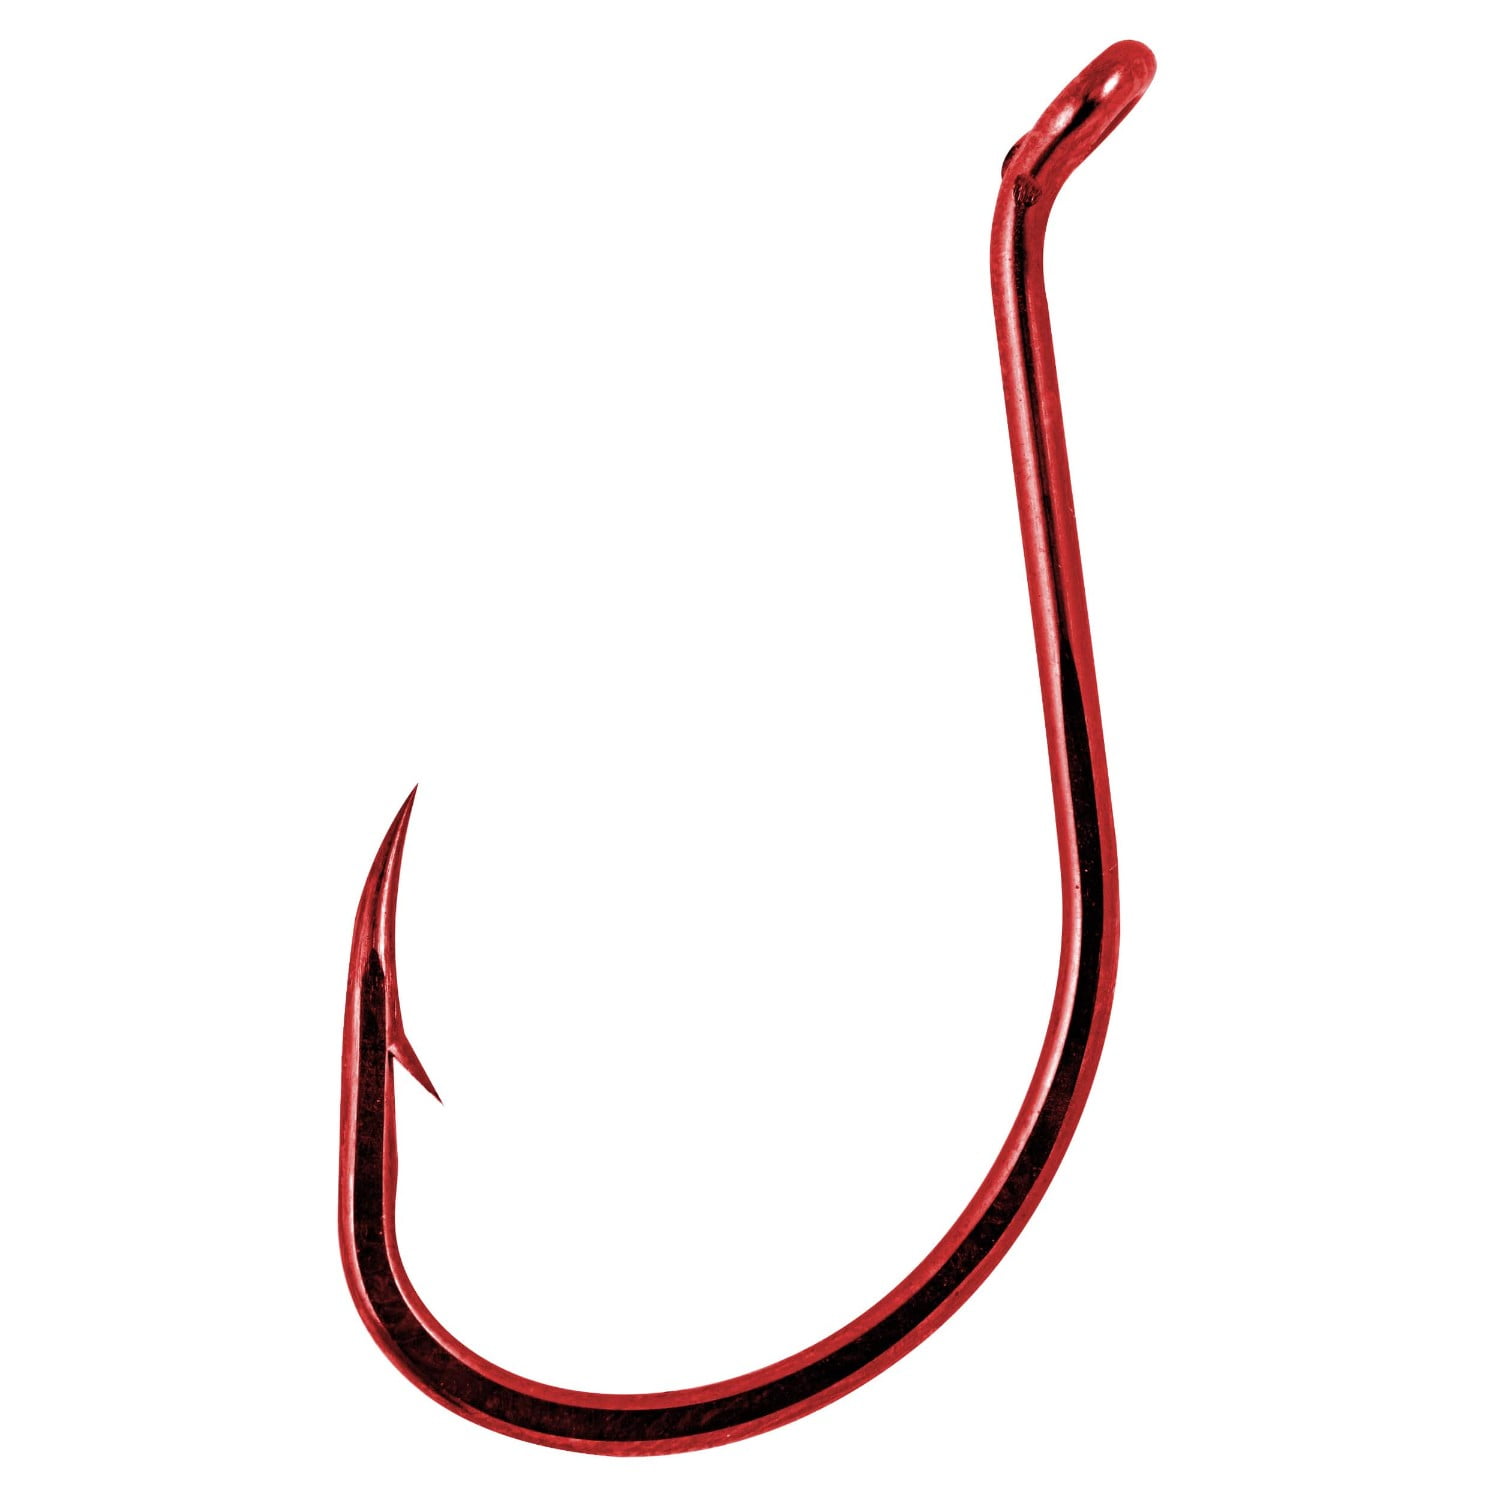 Gamakatsu Gs240133 Octopus Hook Size 1 Red per 8 02310 for sale online 